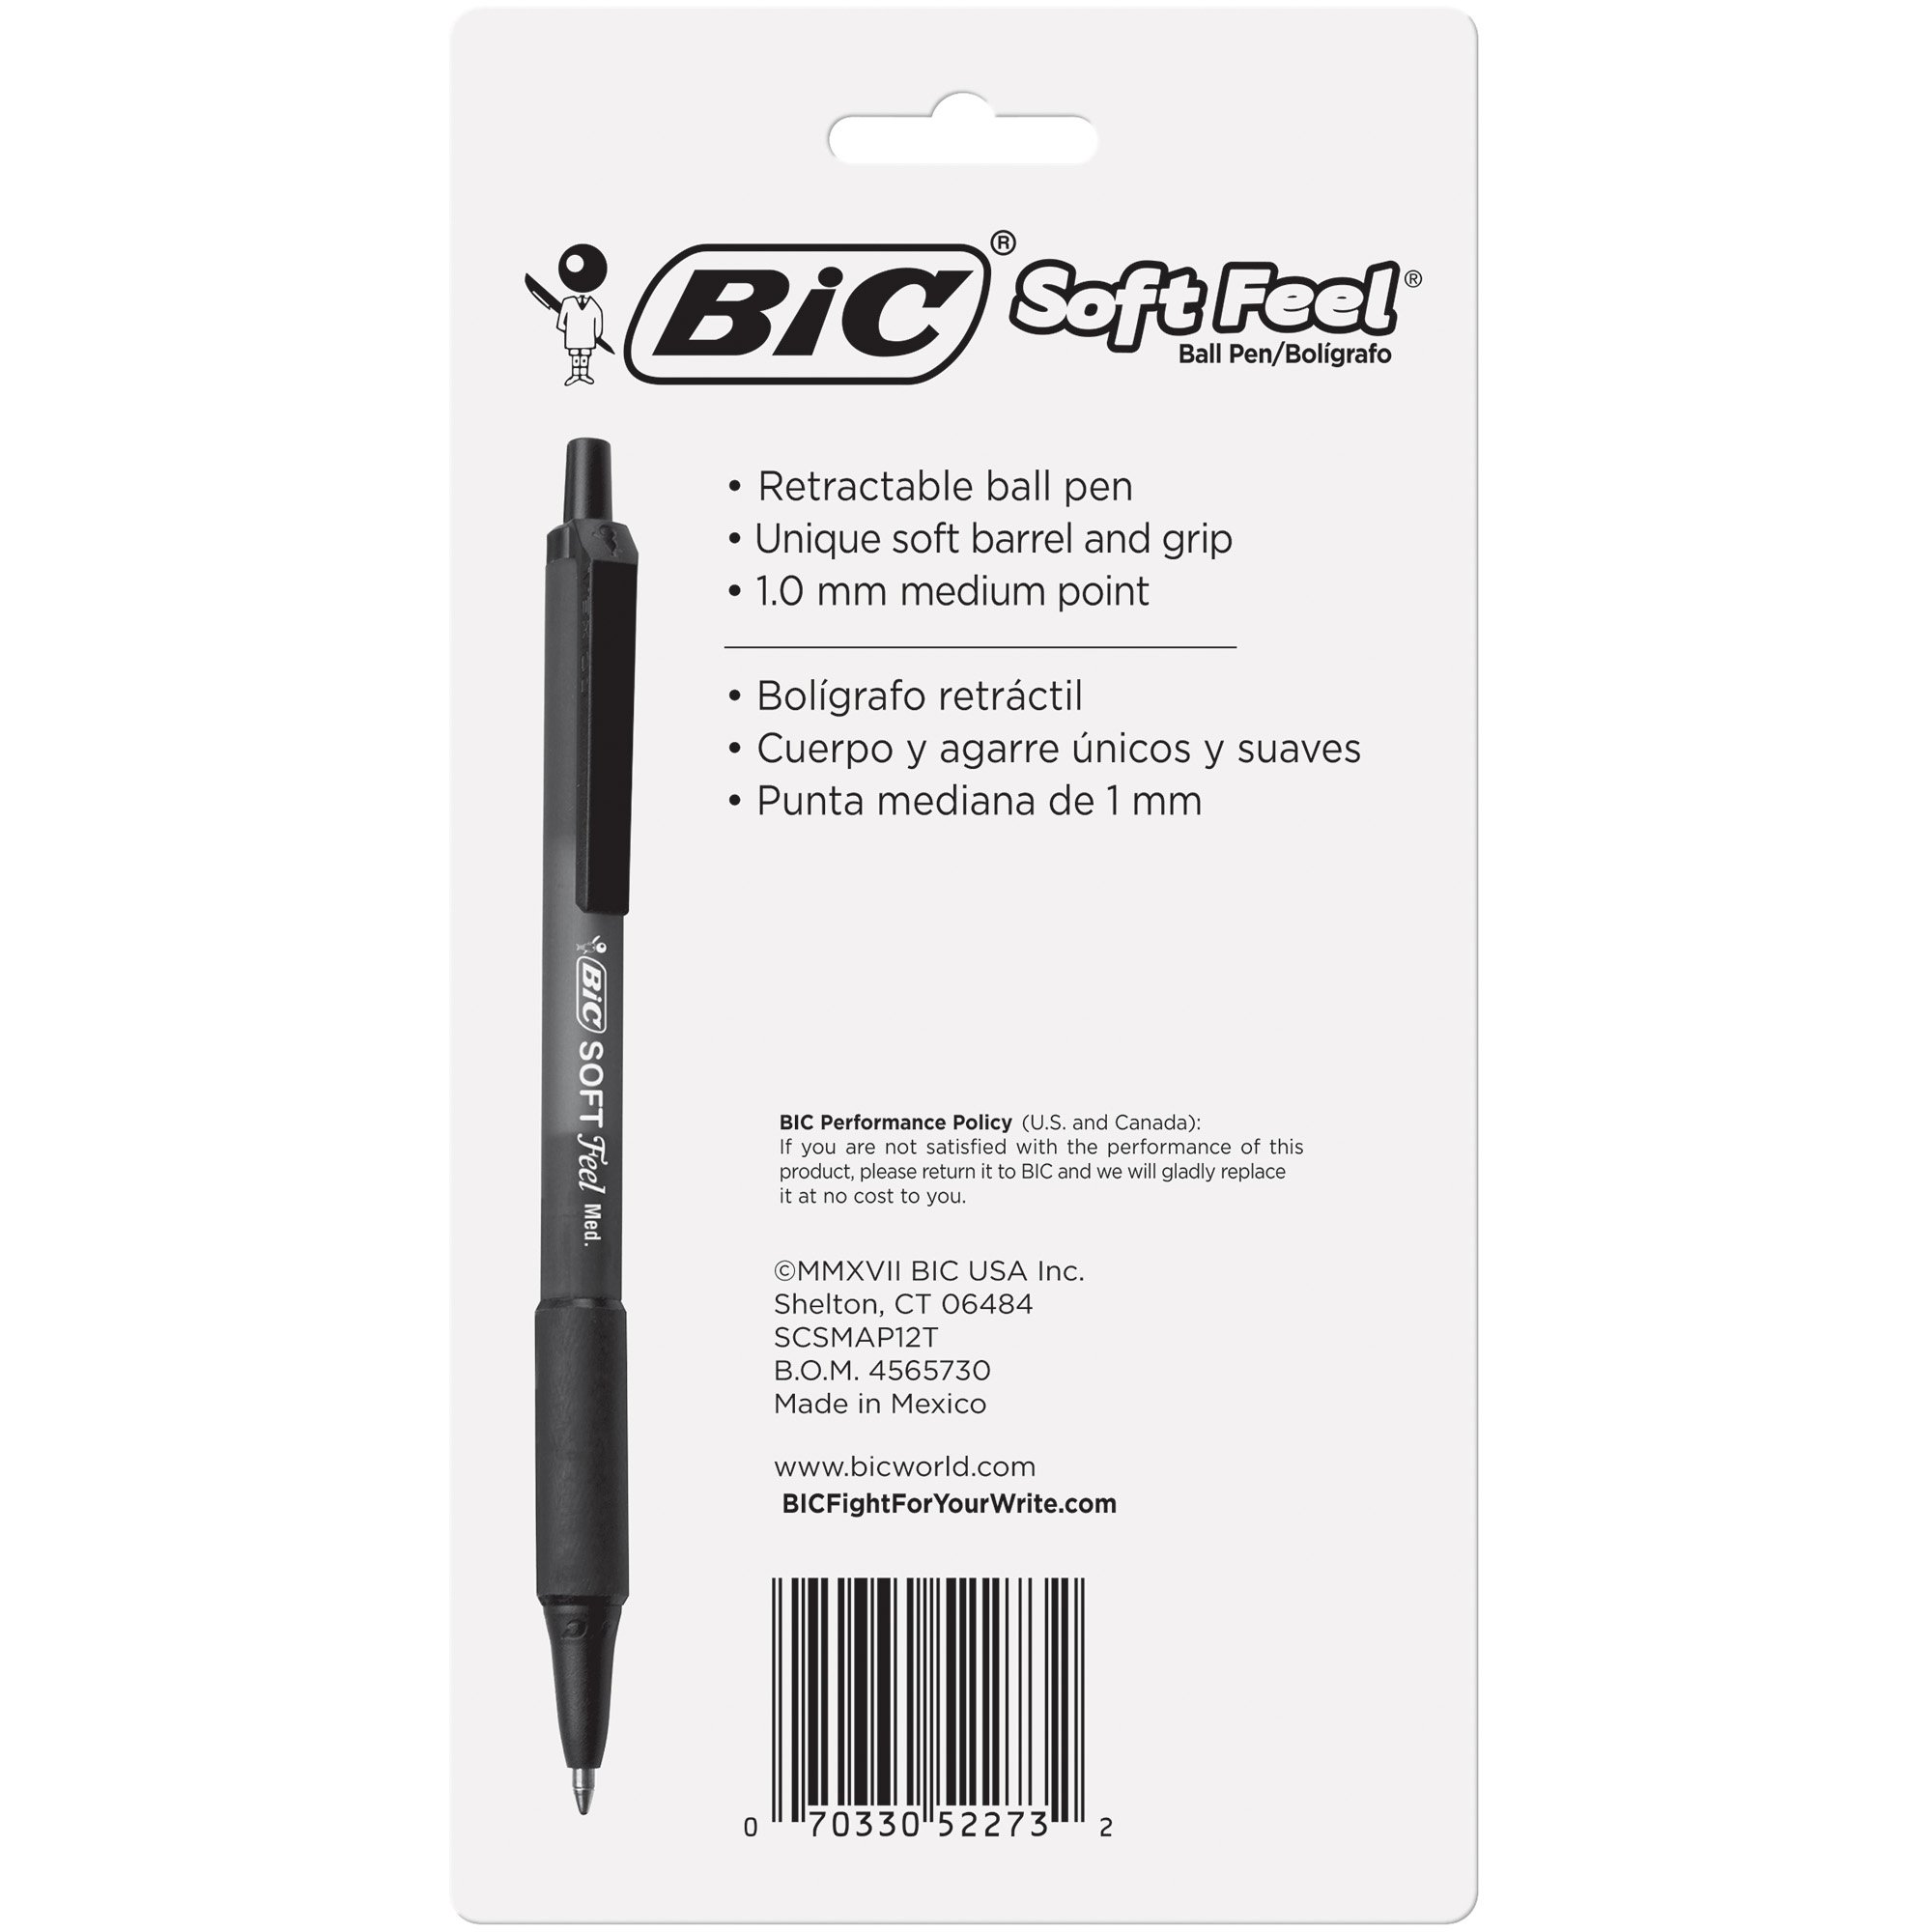 Bic Soft Feel Medium Point Retractable Ball Point Pens - Shop Pens at H-E-B